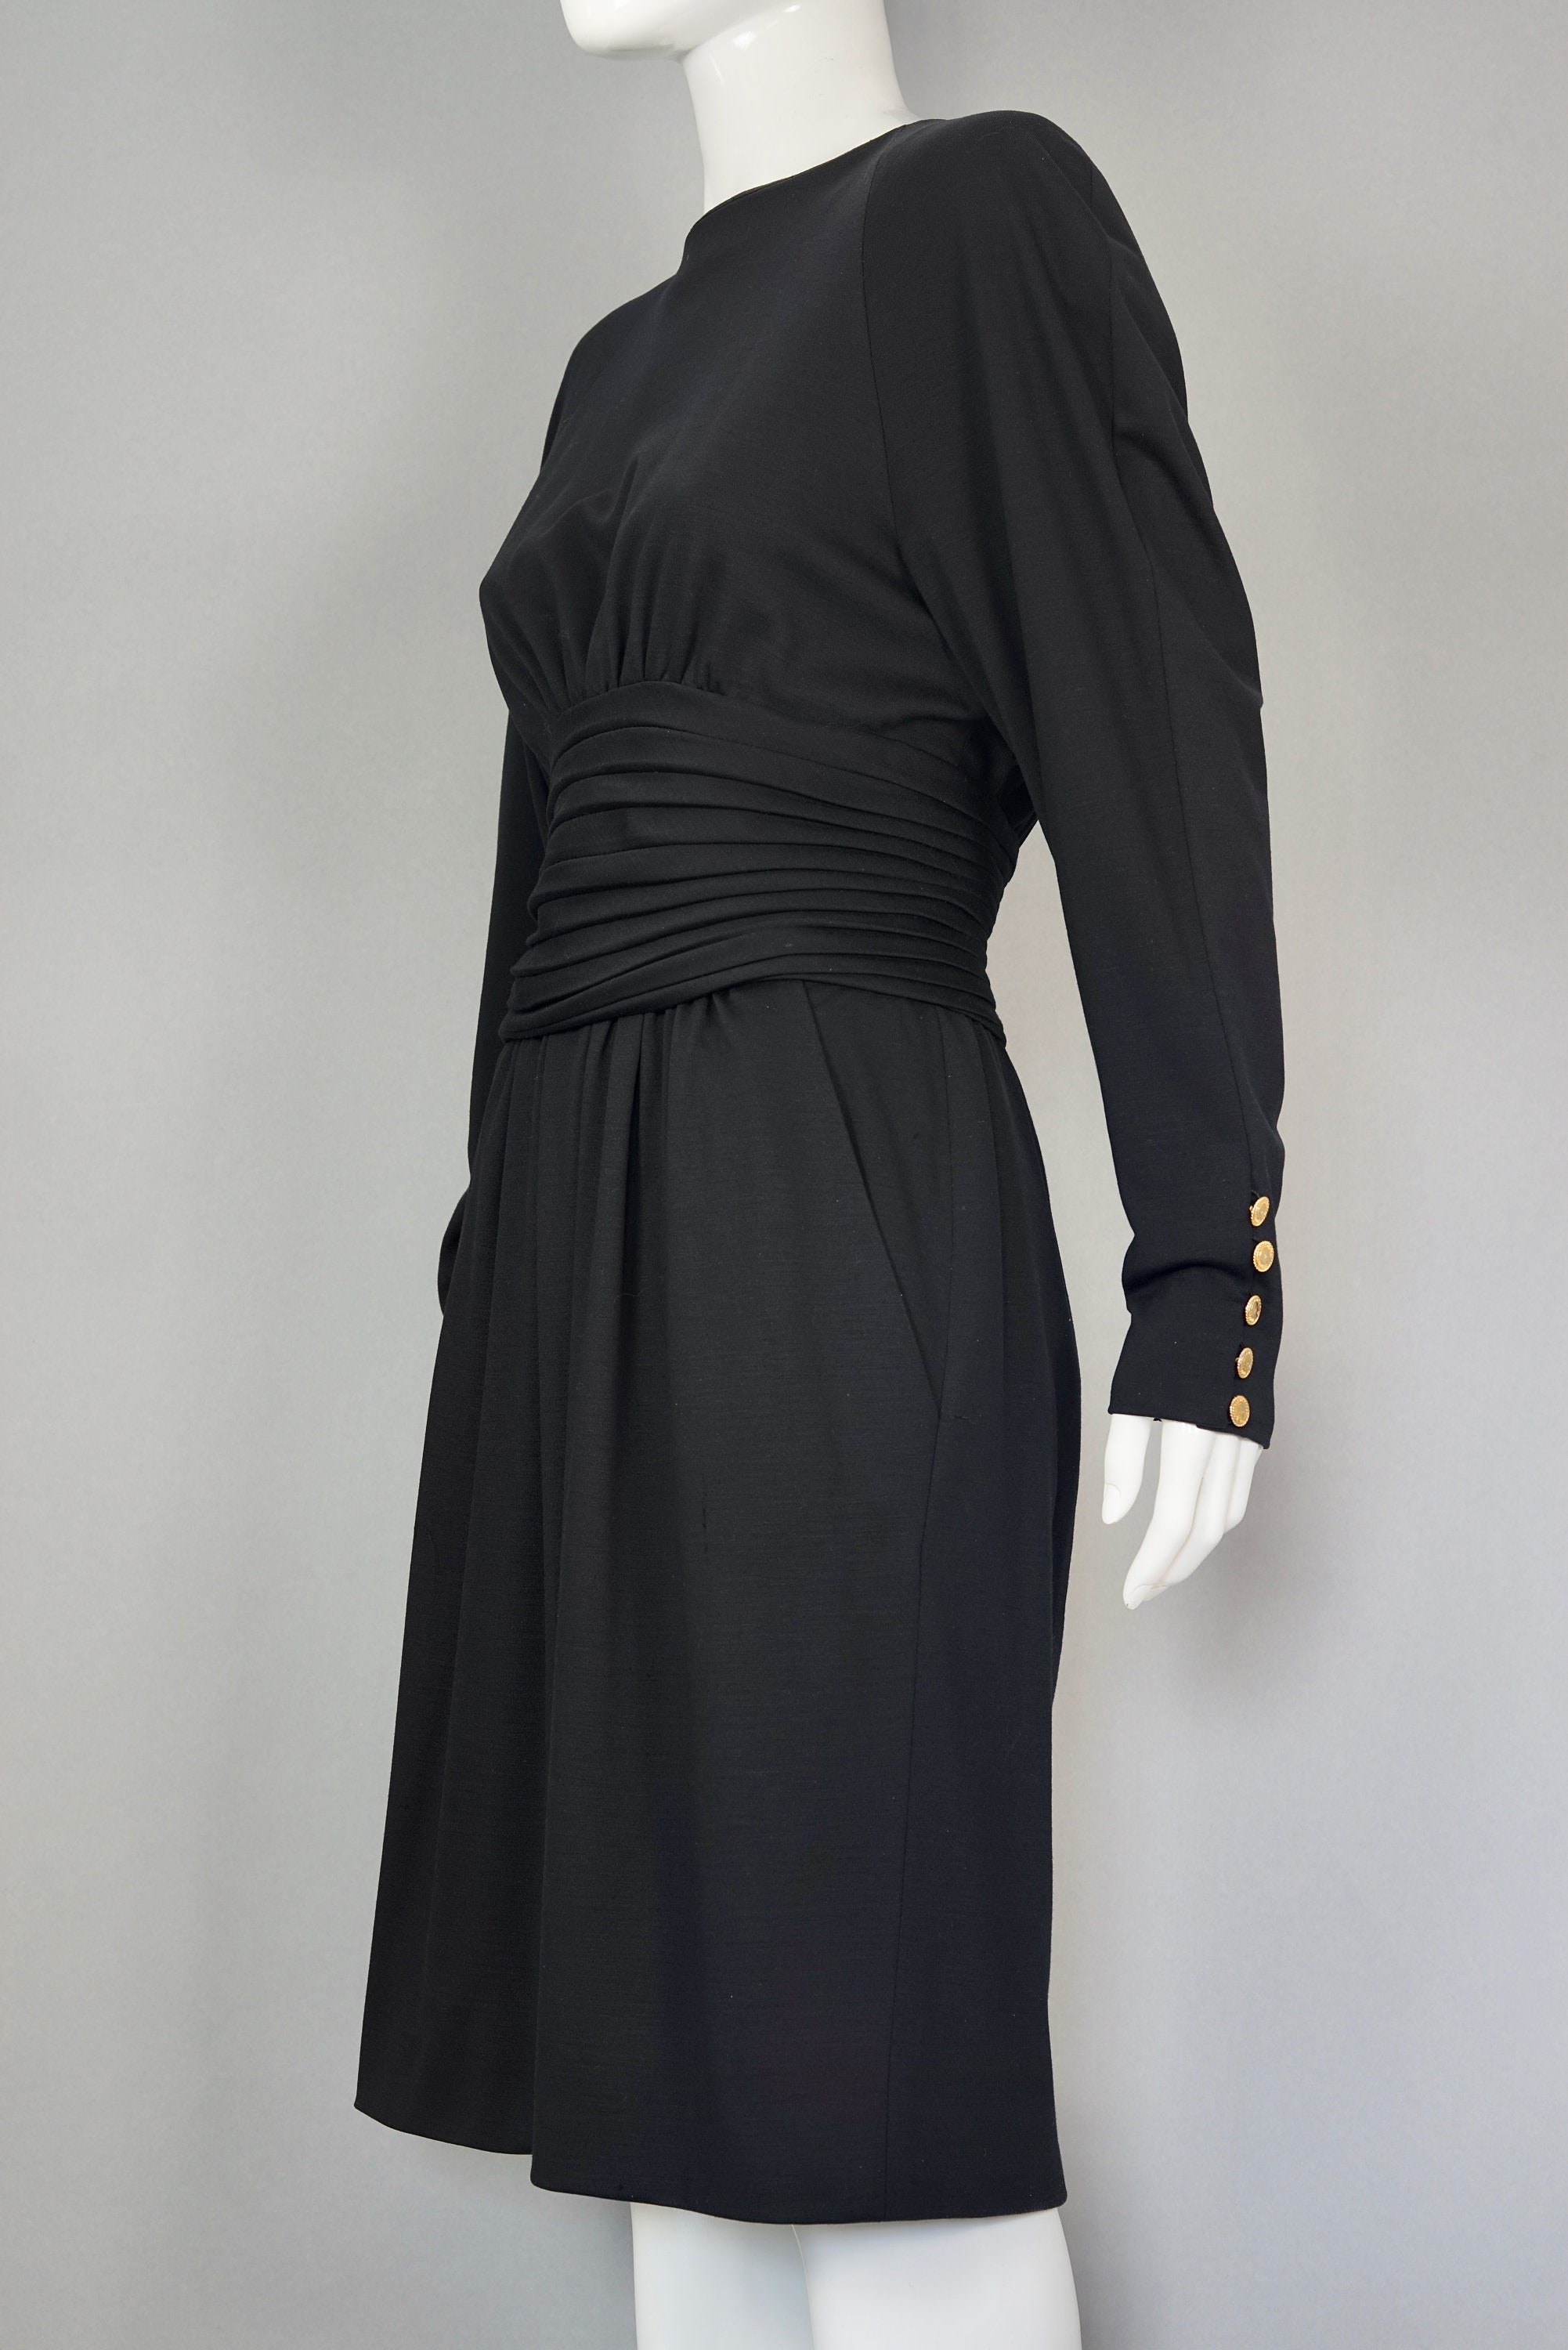 Chanel Vintage Sculptural Mini Dress Size FR 38